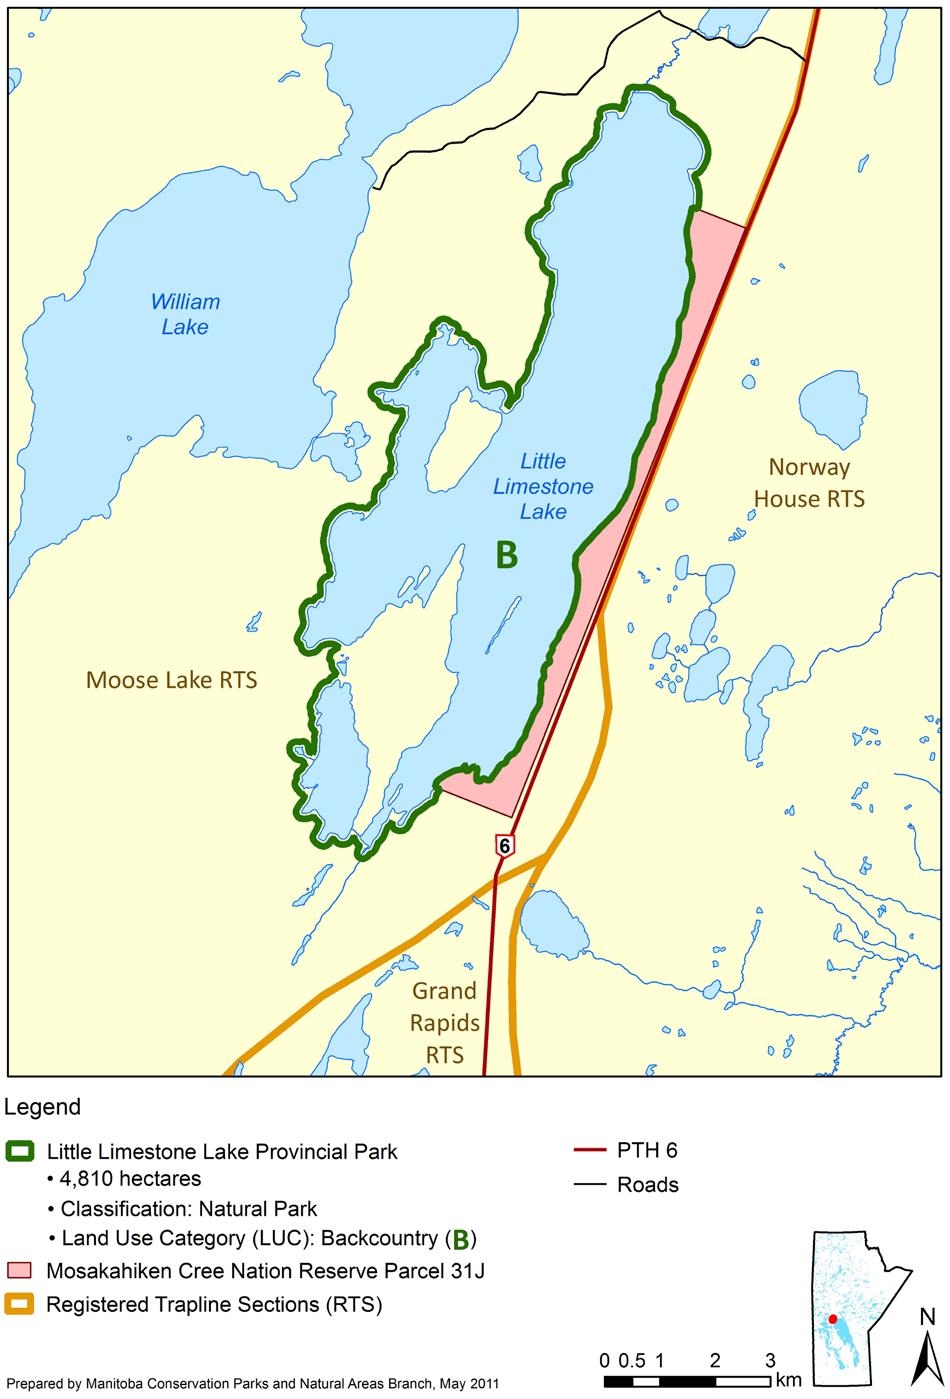 4 Little Limestone Lake Provincial Park The area was designated a provincial park on June 7, 2011.